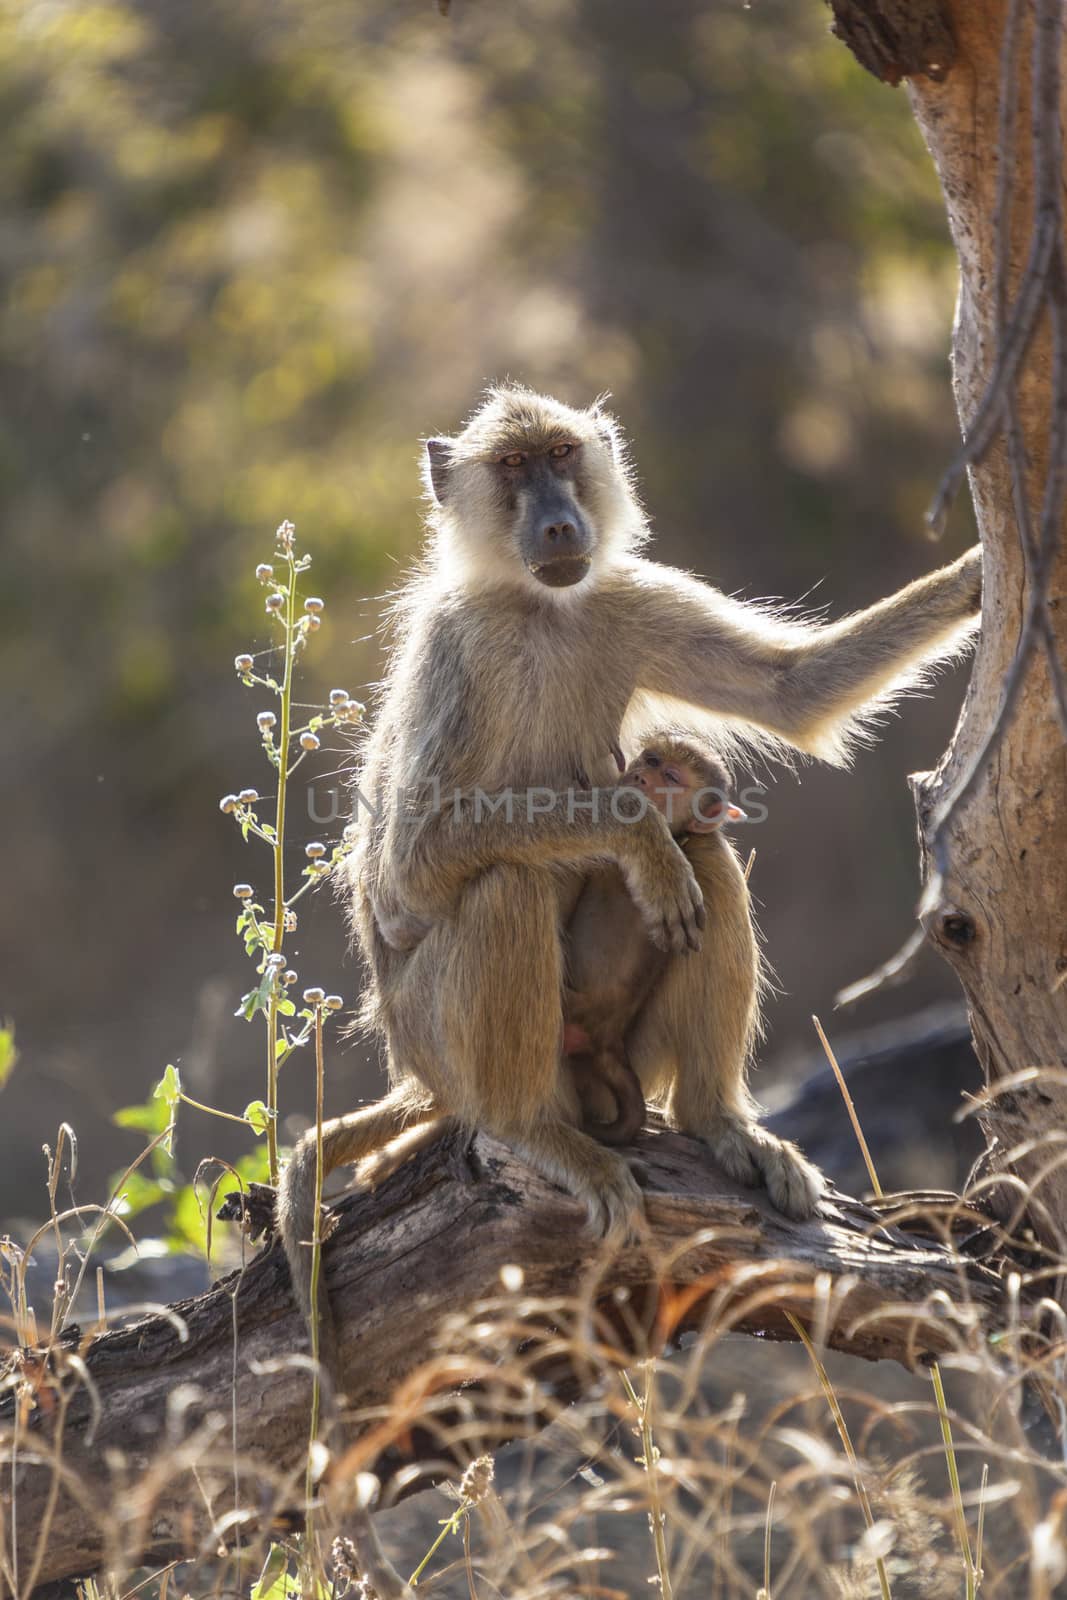 Monkey On A Tree by Imagecom